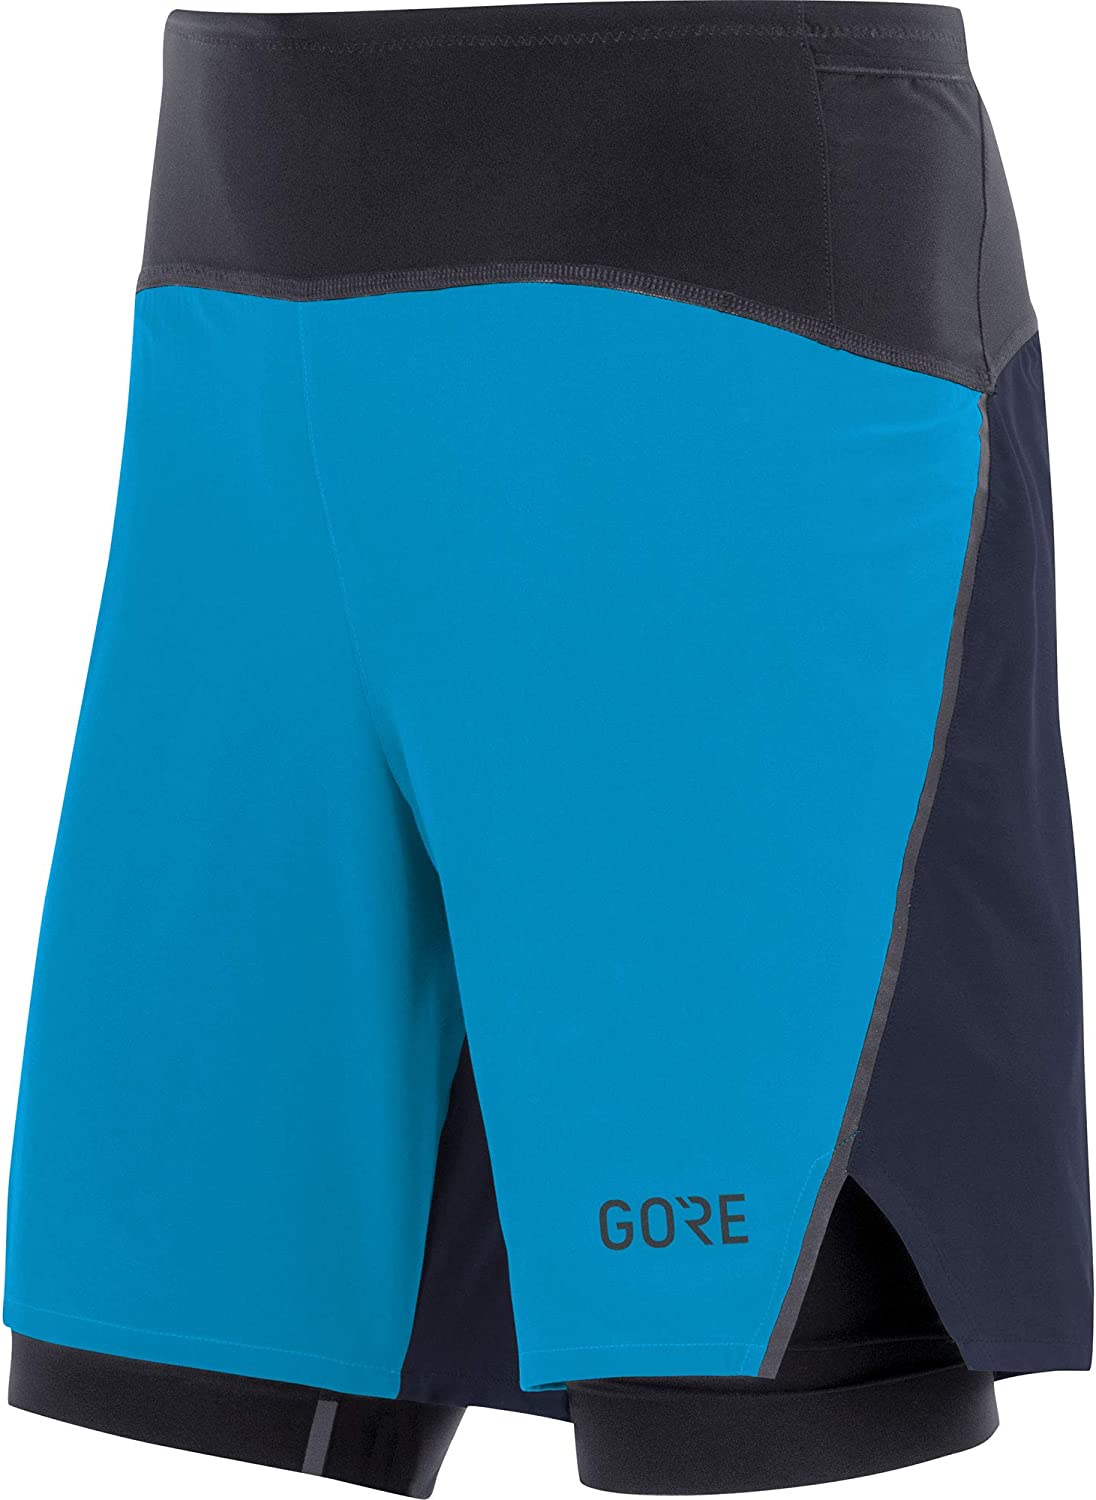 Gore Wear - R7 2In1 Shorts - Pantalón corto running - Hombre